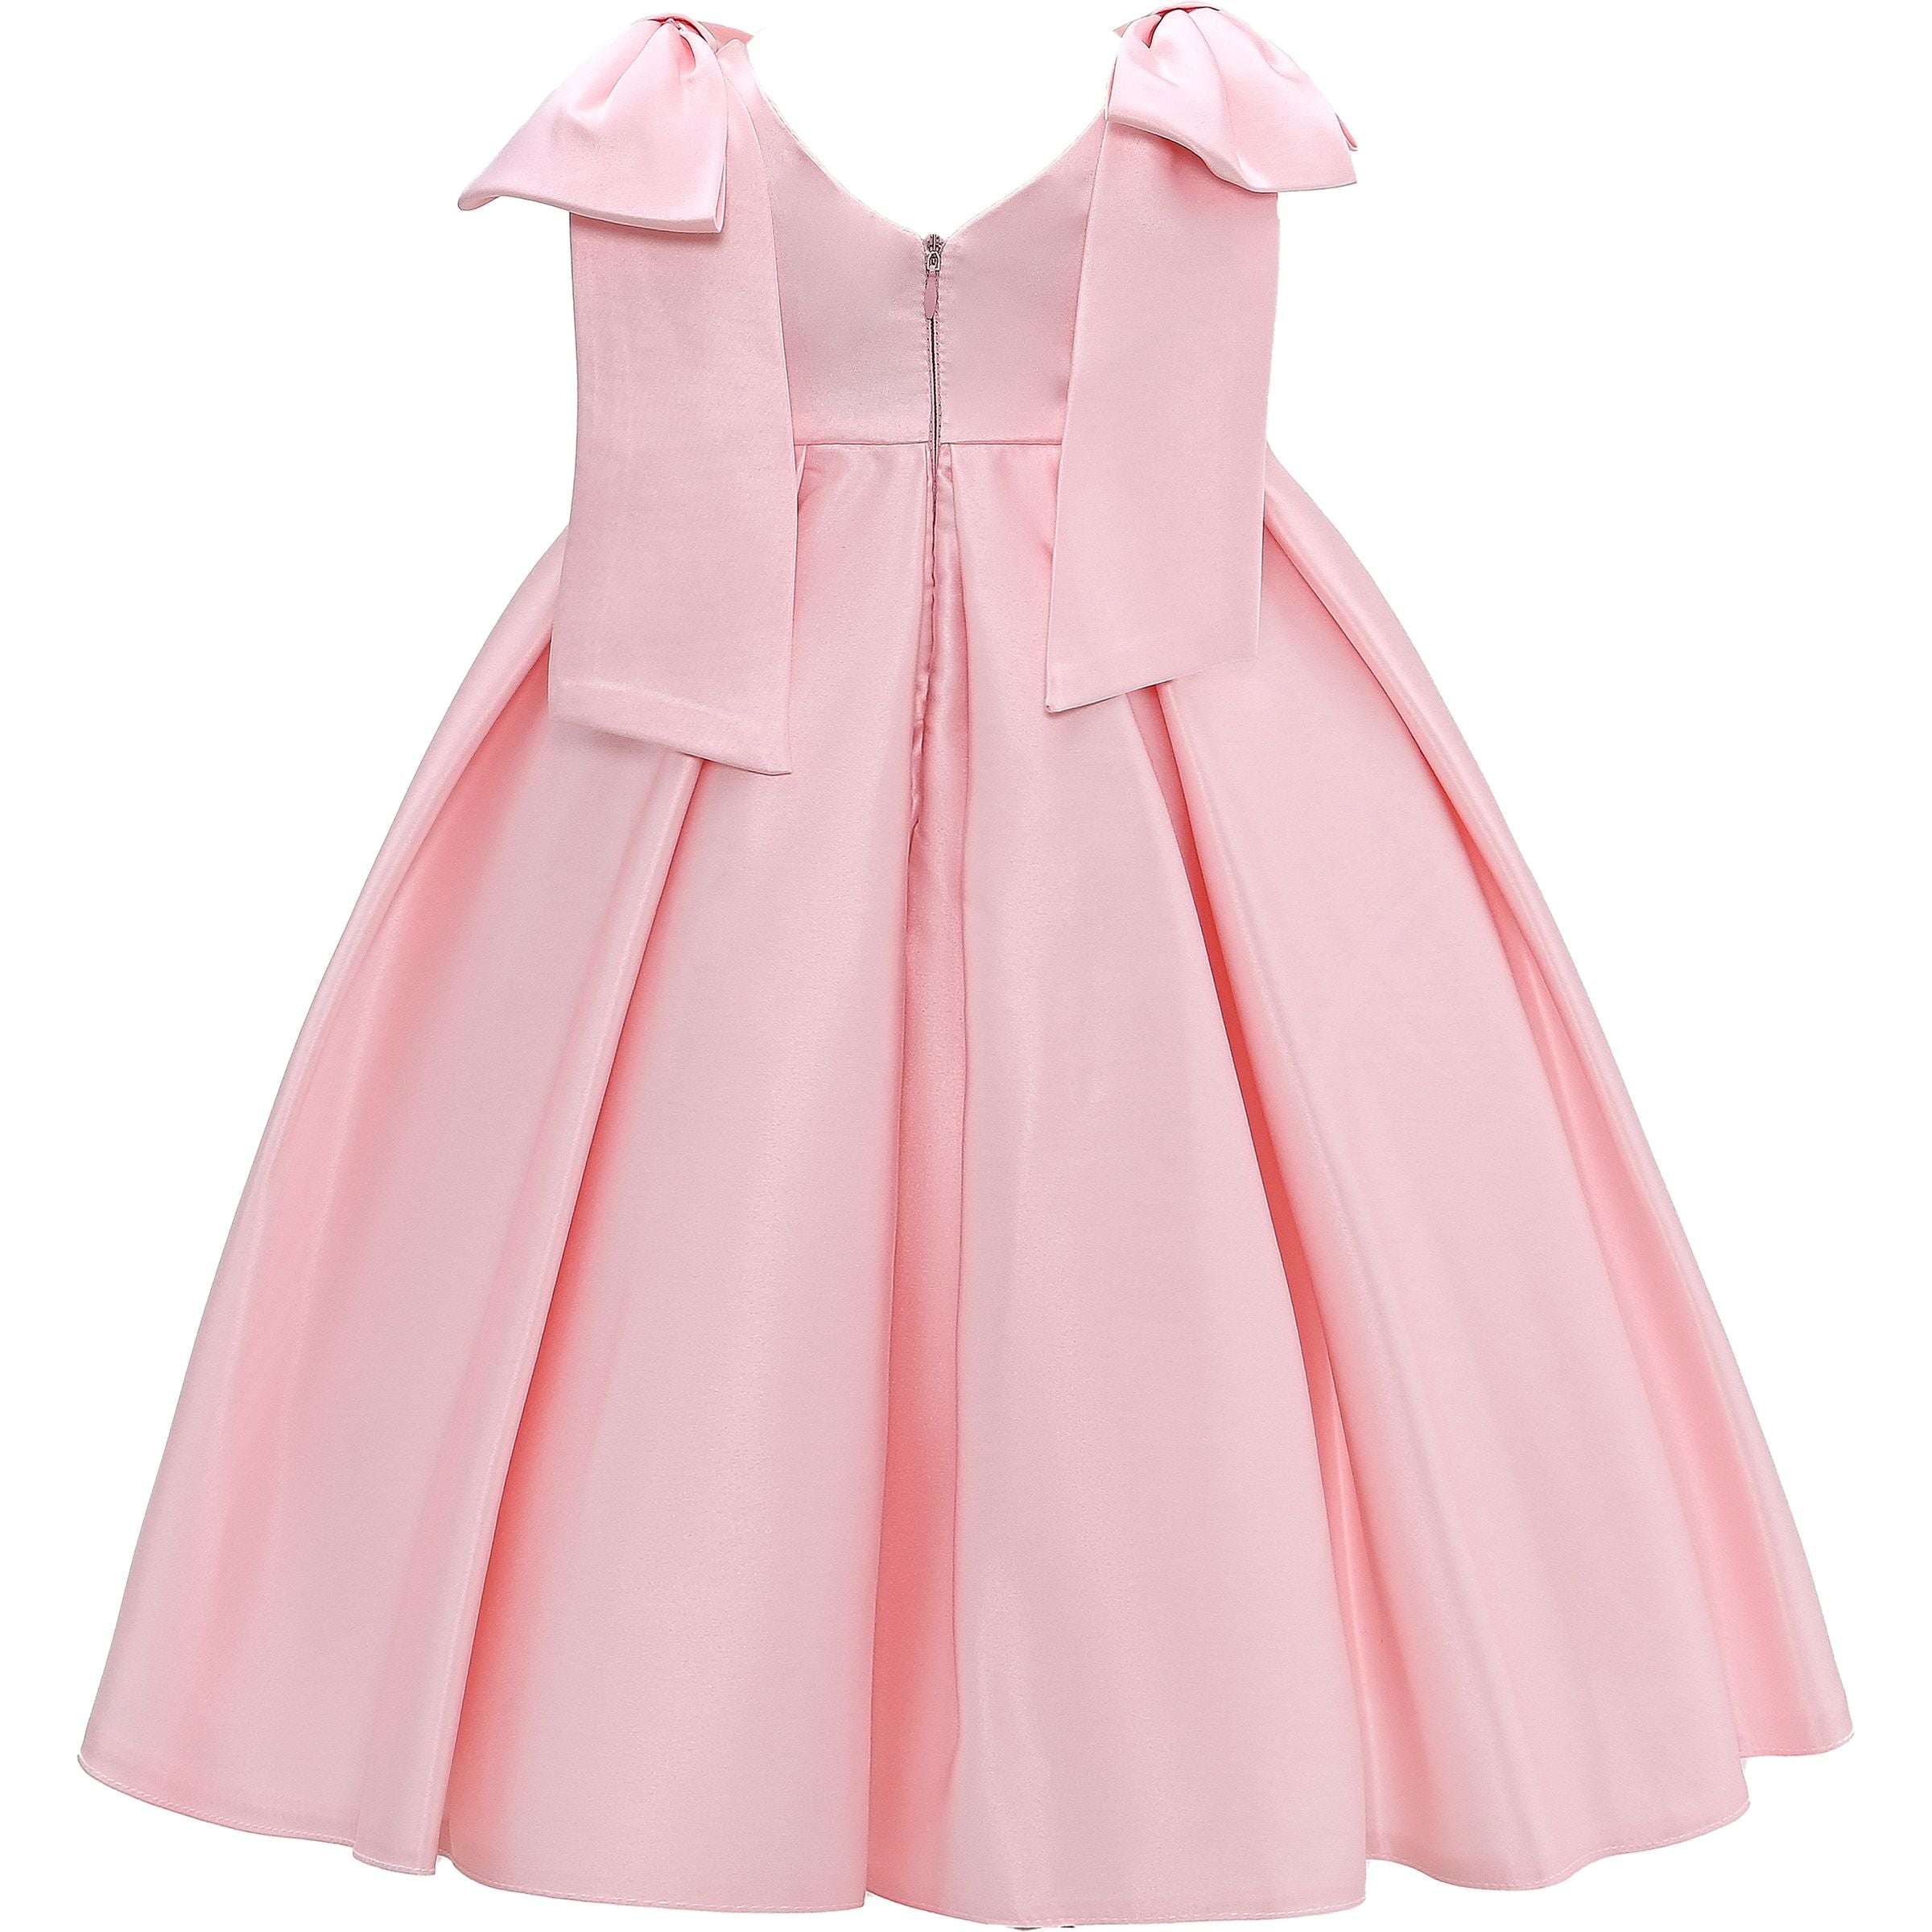 Old Rose Pink Tulle Dress - kids atelier